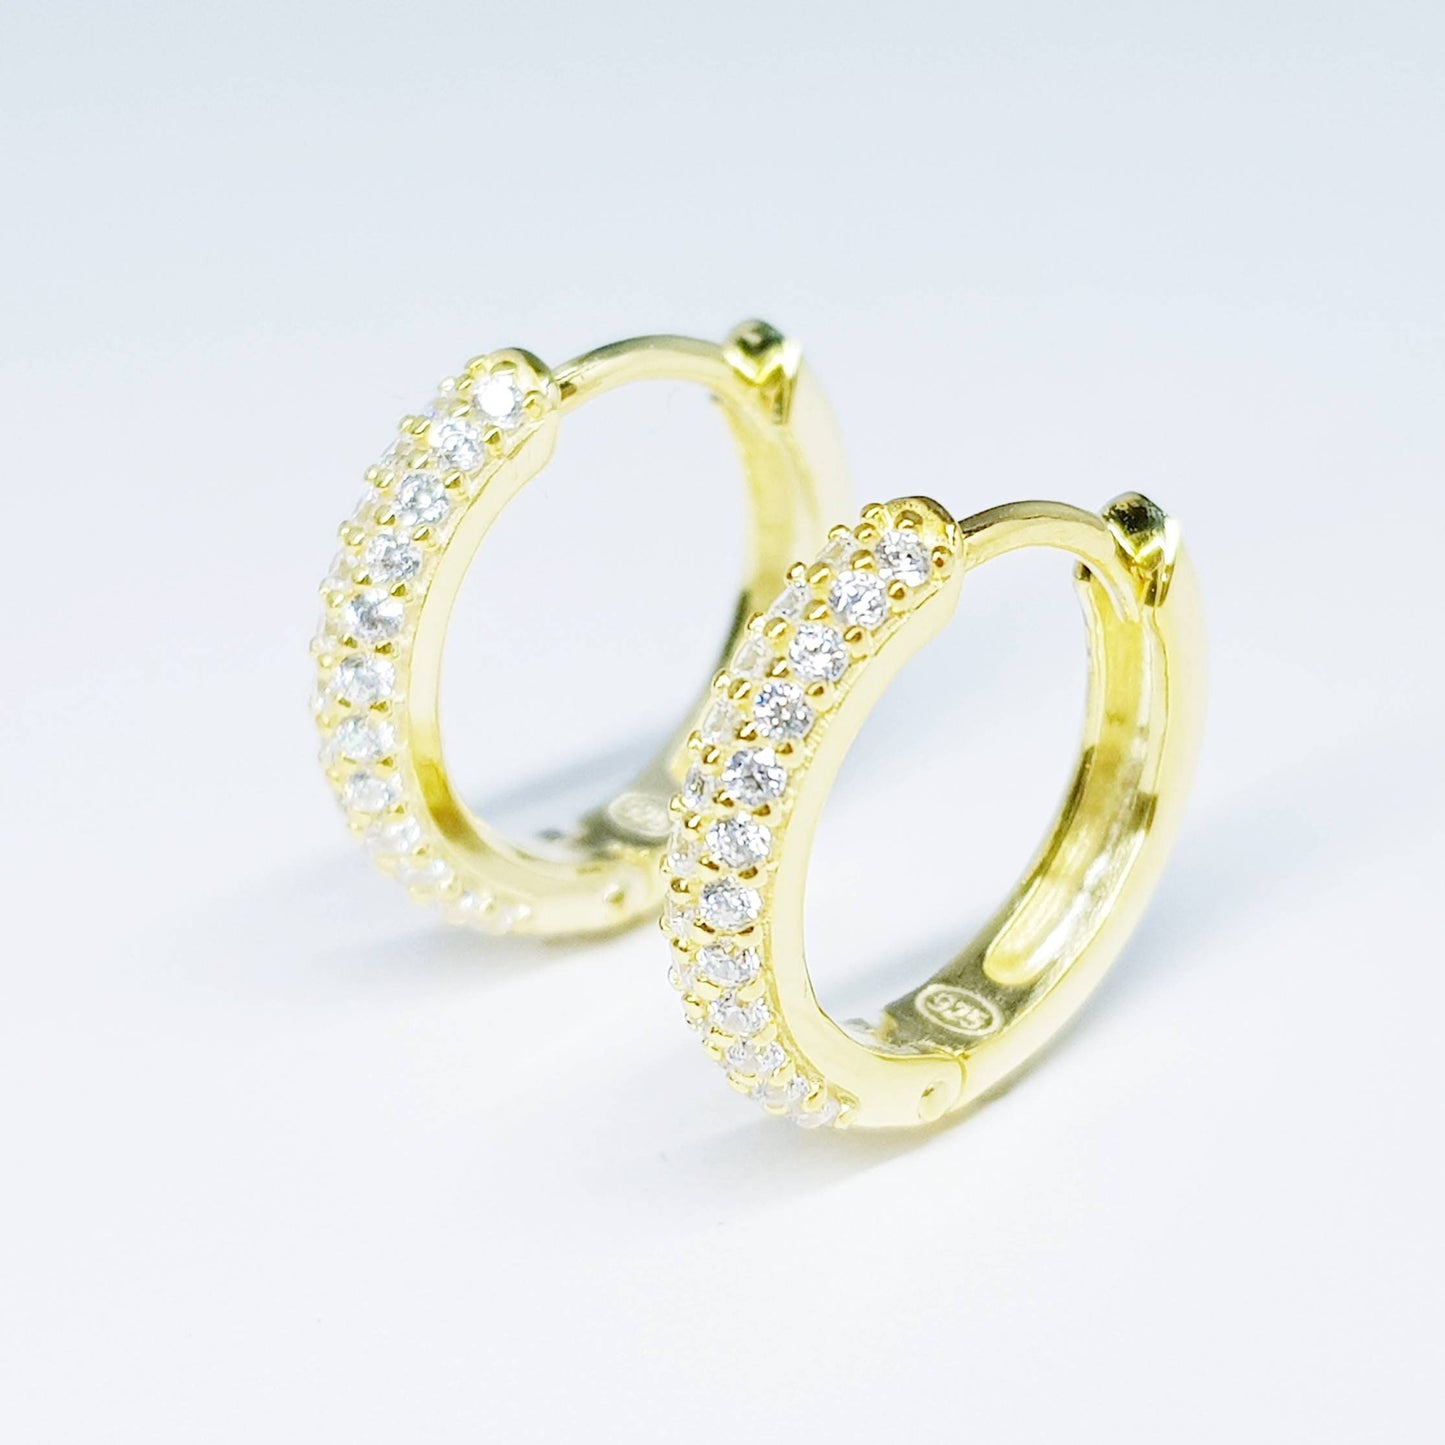 Gold hoop earrings with removable solitaire drop, two earrings in one, faux diamond huggie earrings